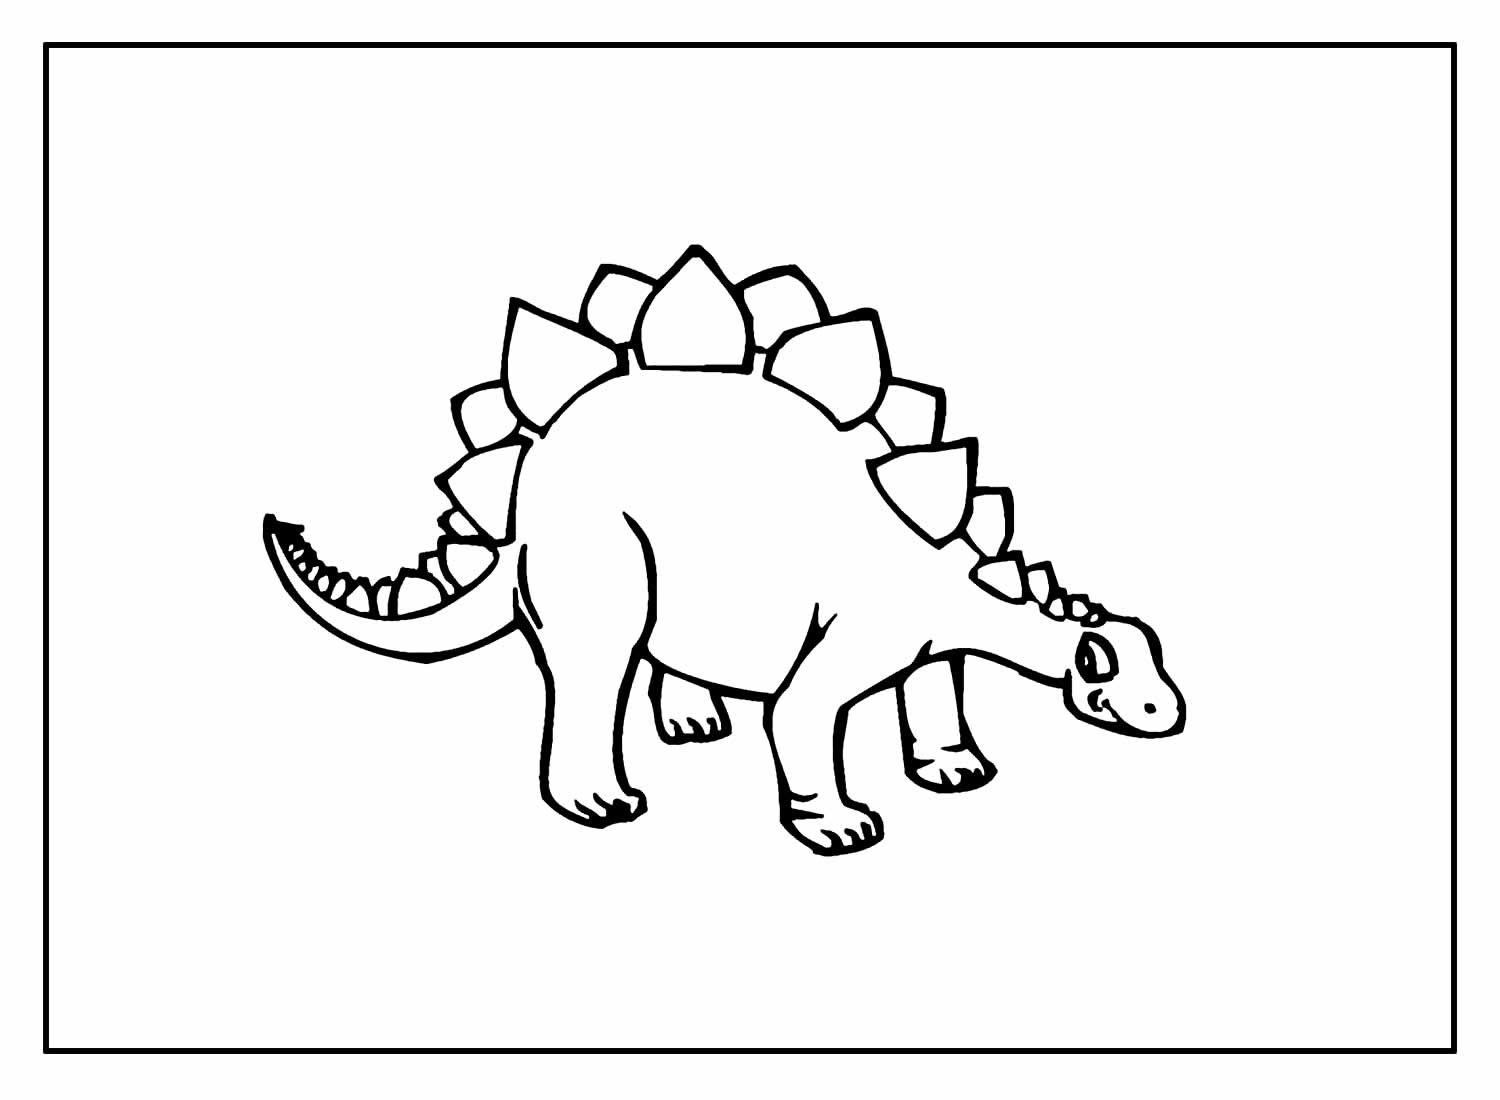 Dinossauro lindo para colorir